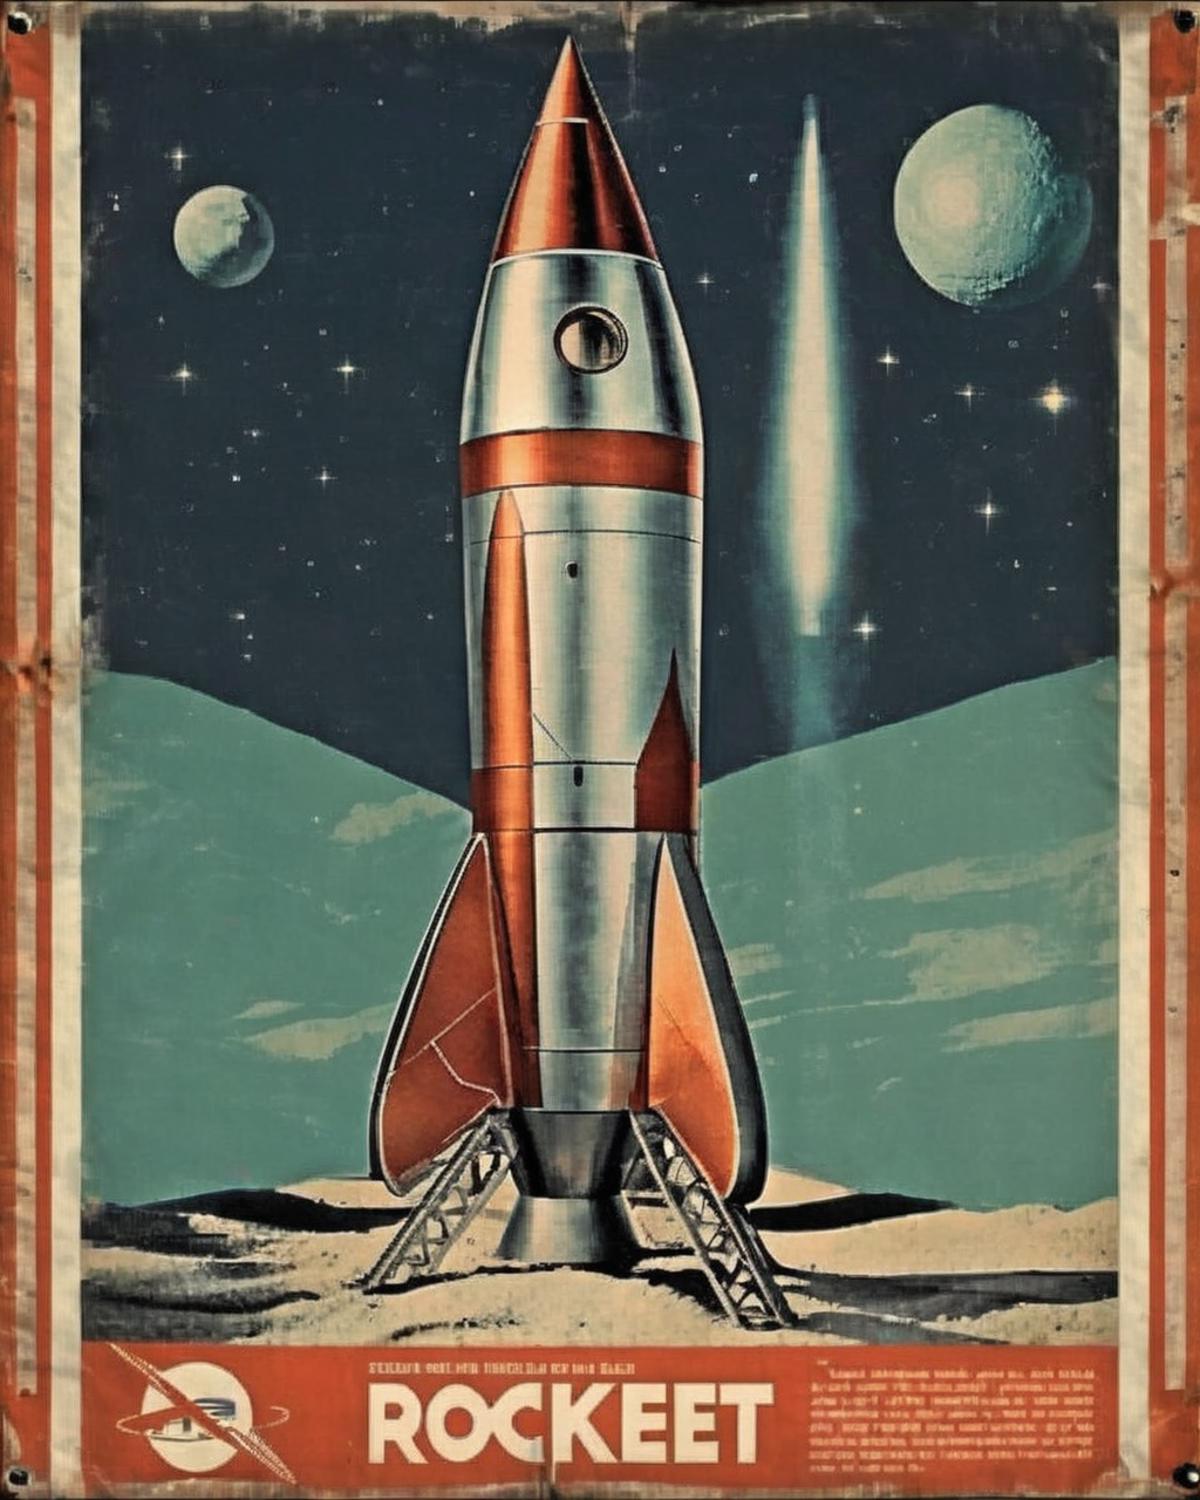 Retro Rocket image by Ciro_Negrogni